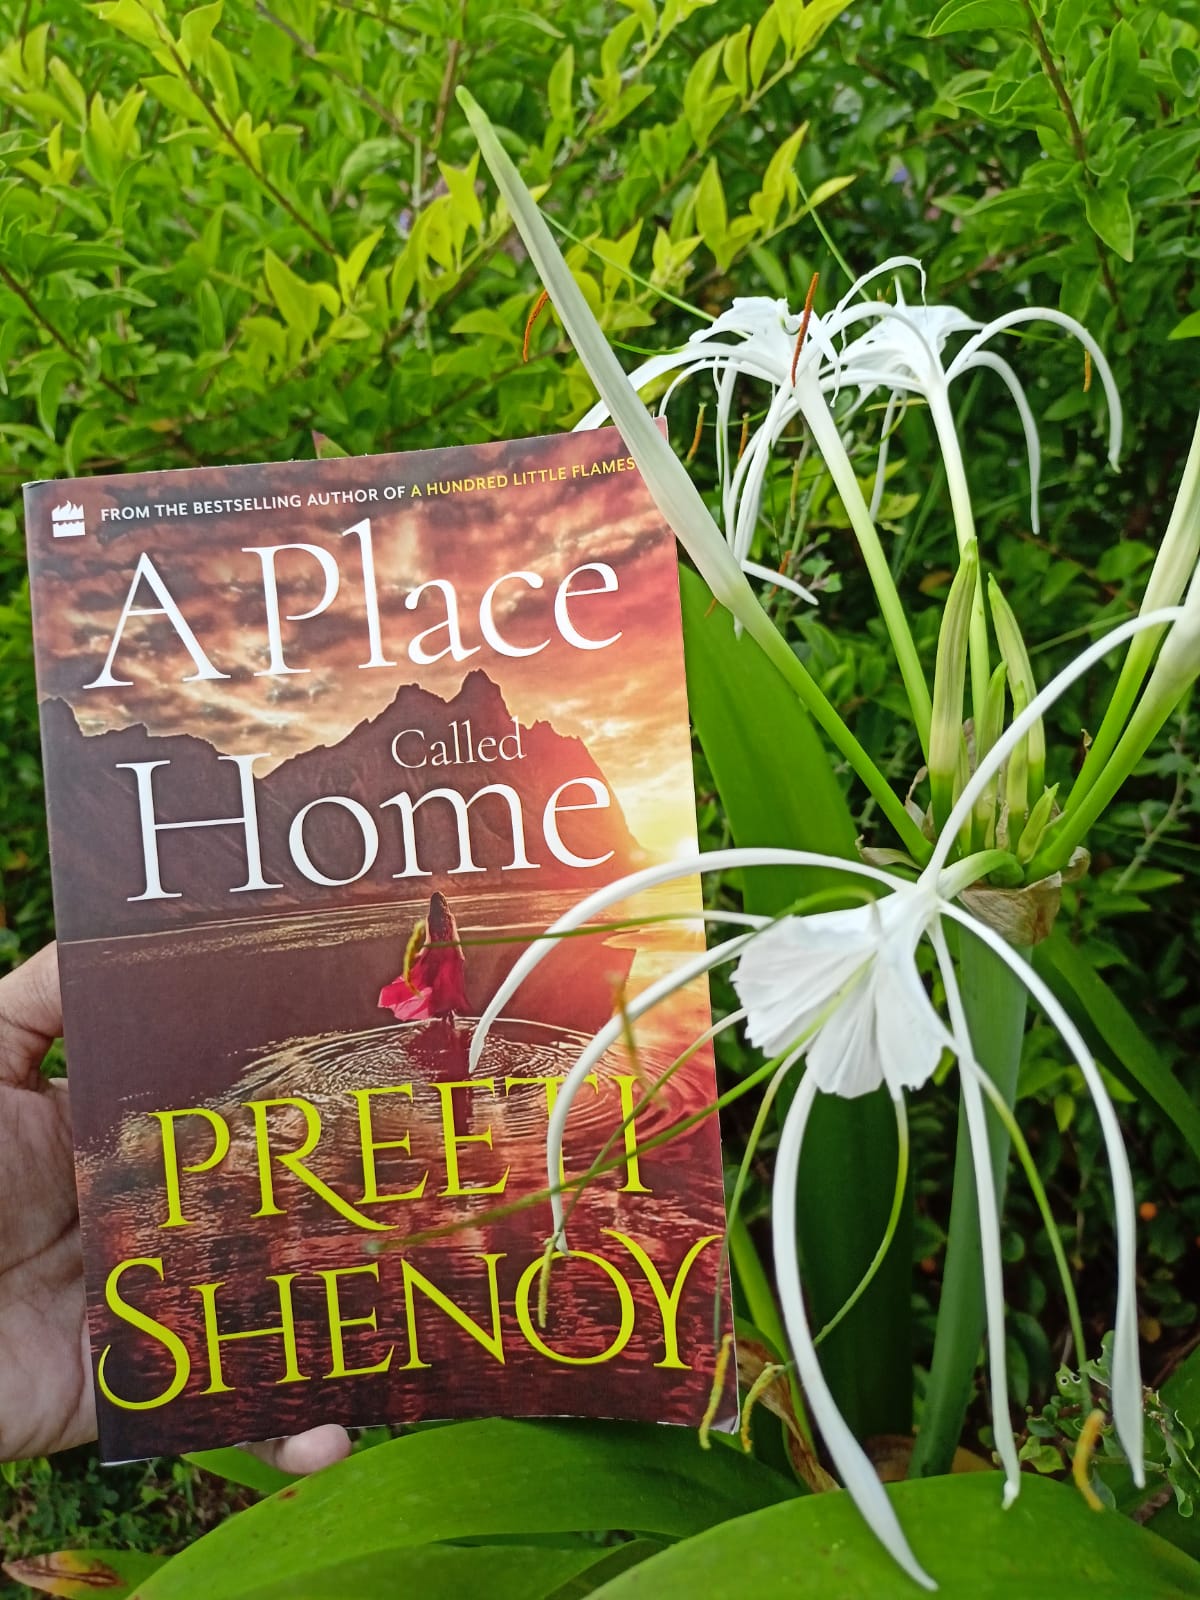 a place called home preeti shenoy pdf free download